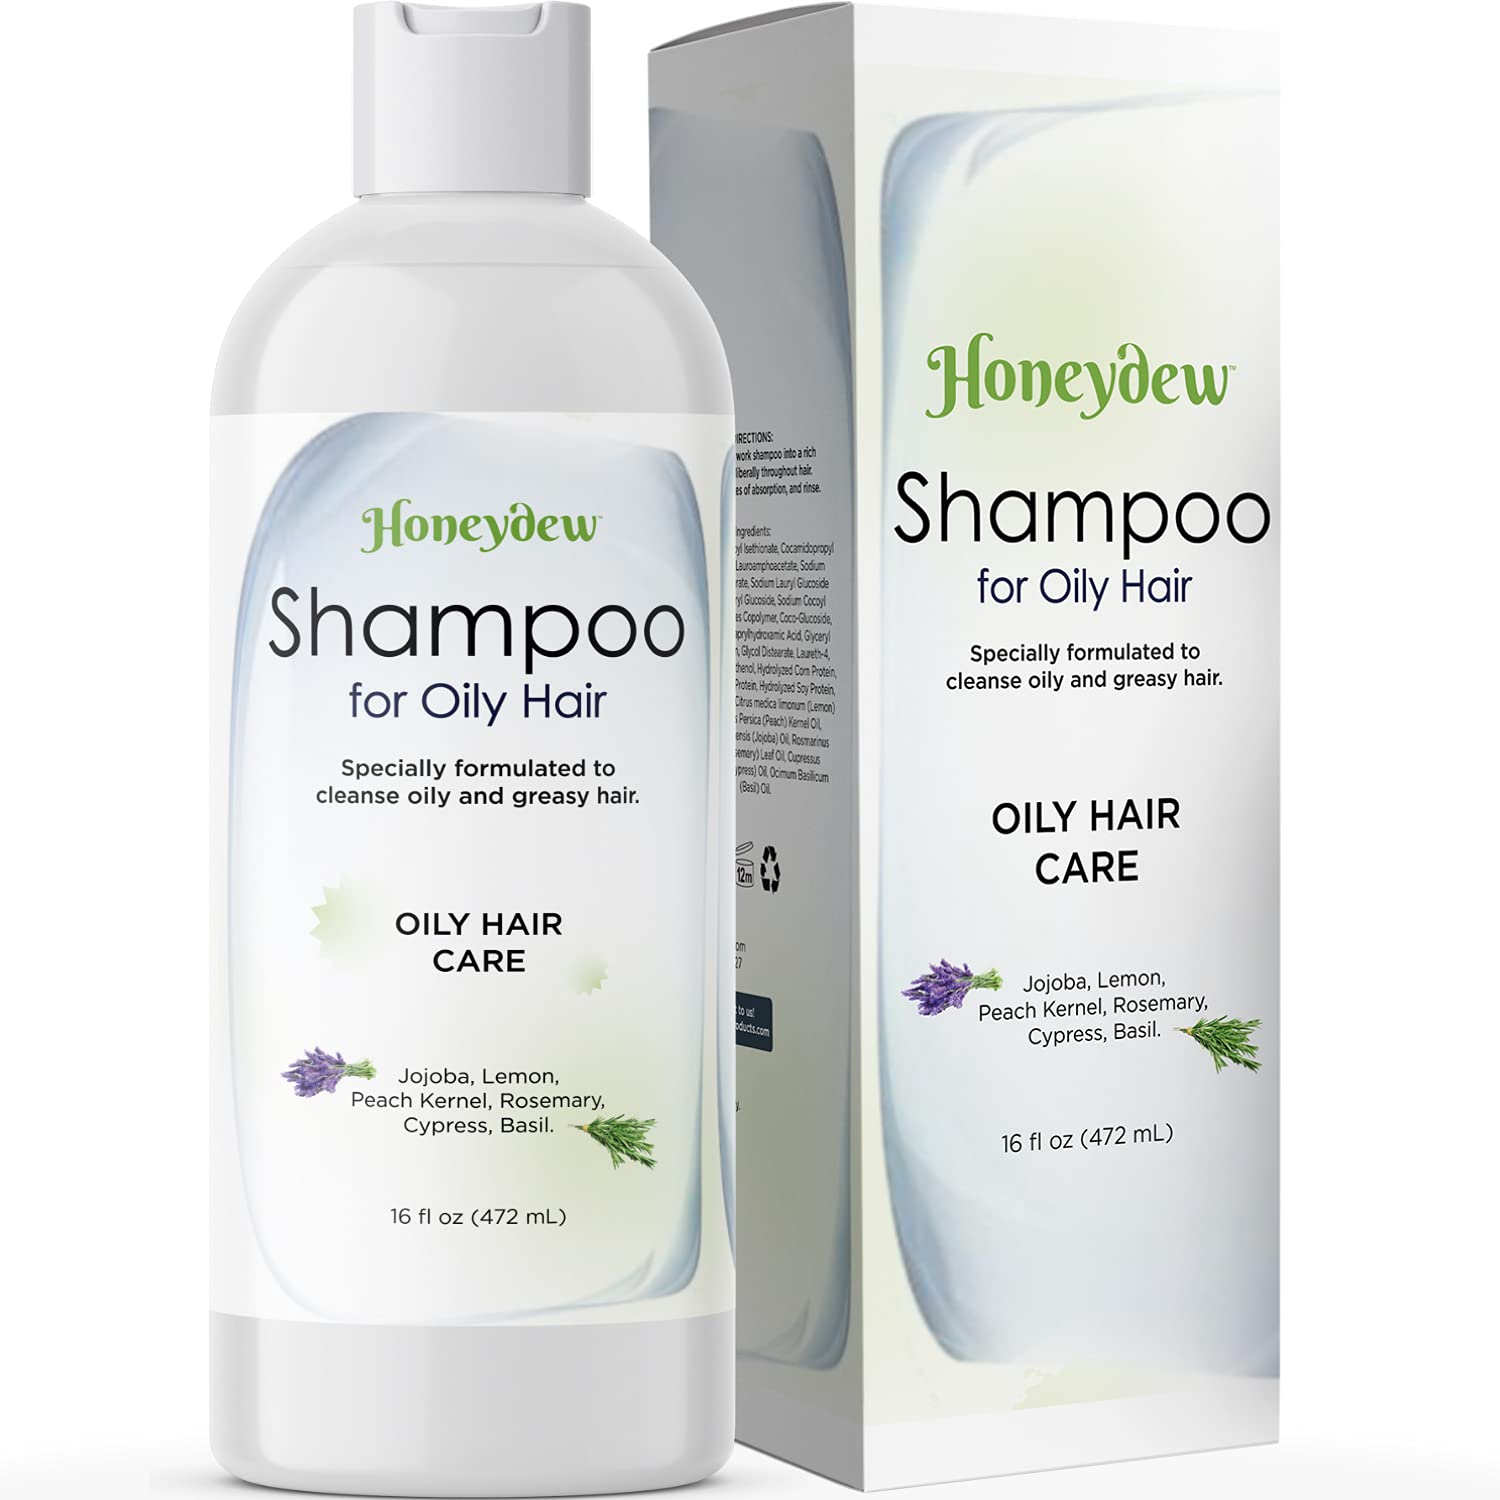  4. Honeydew Shampoo for Oily Hair and Dandruff 